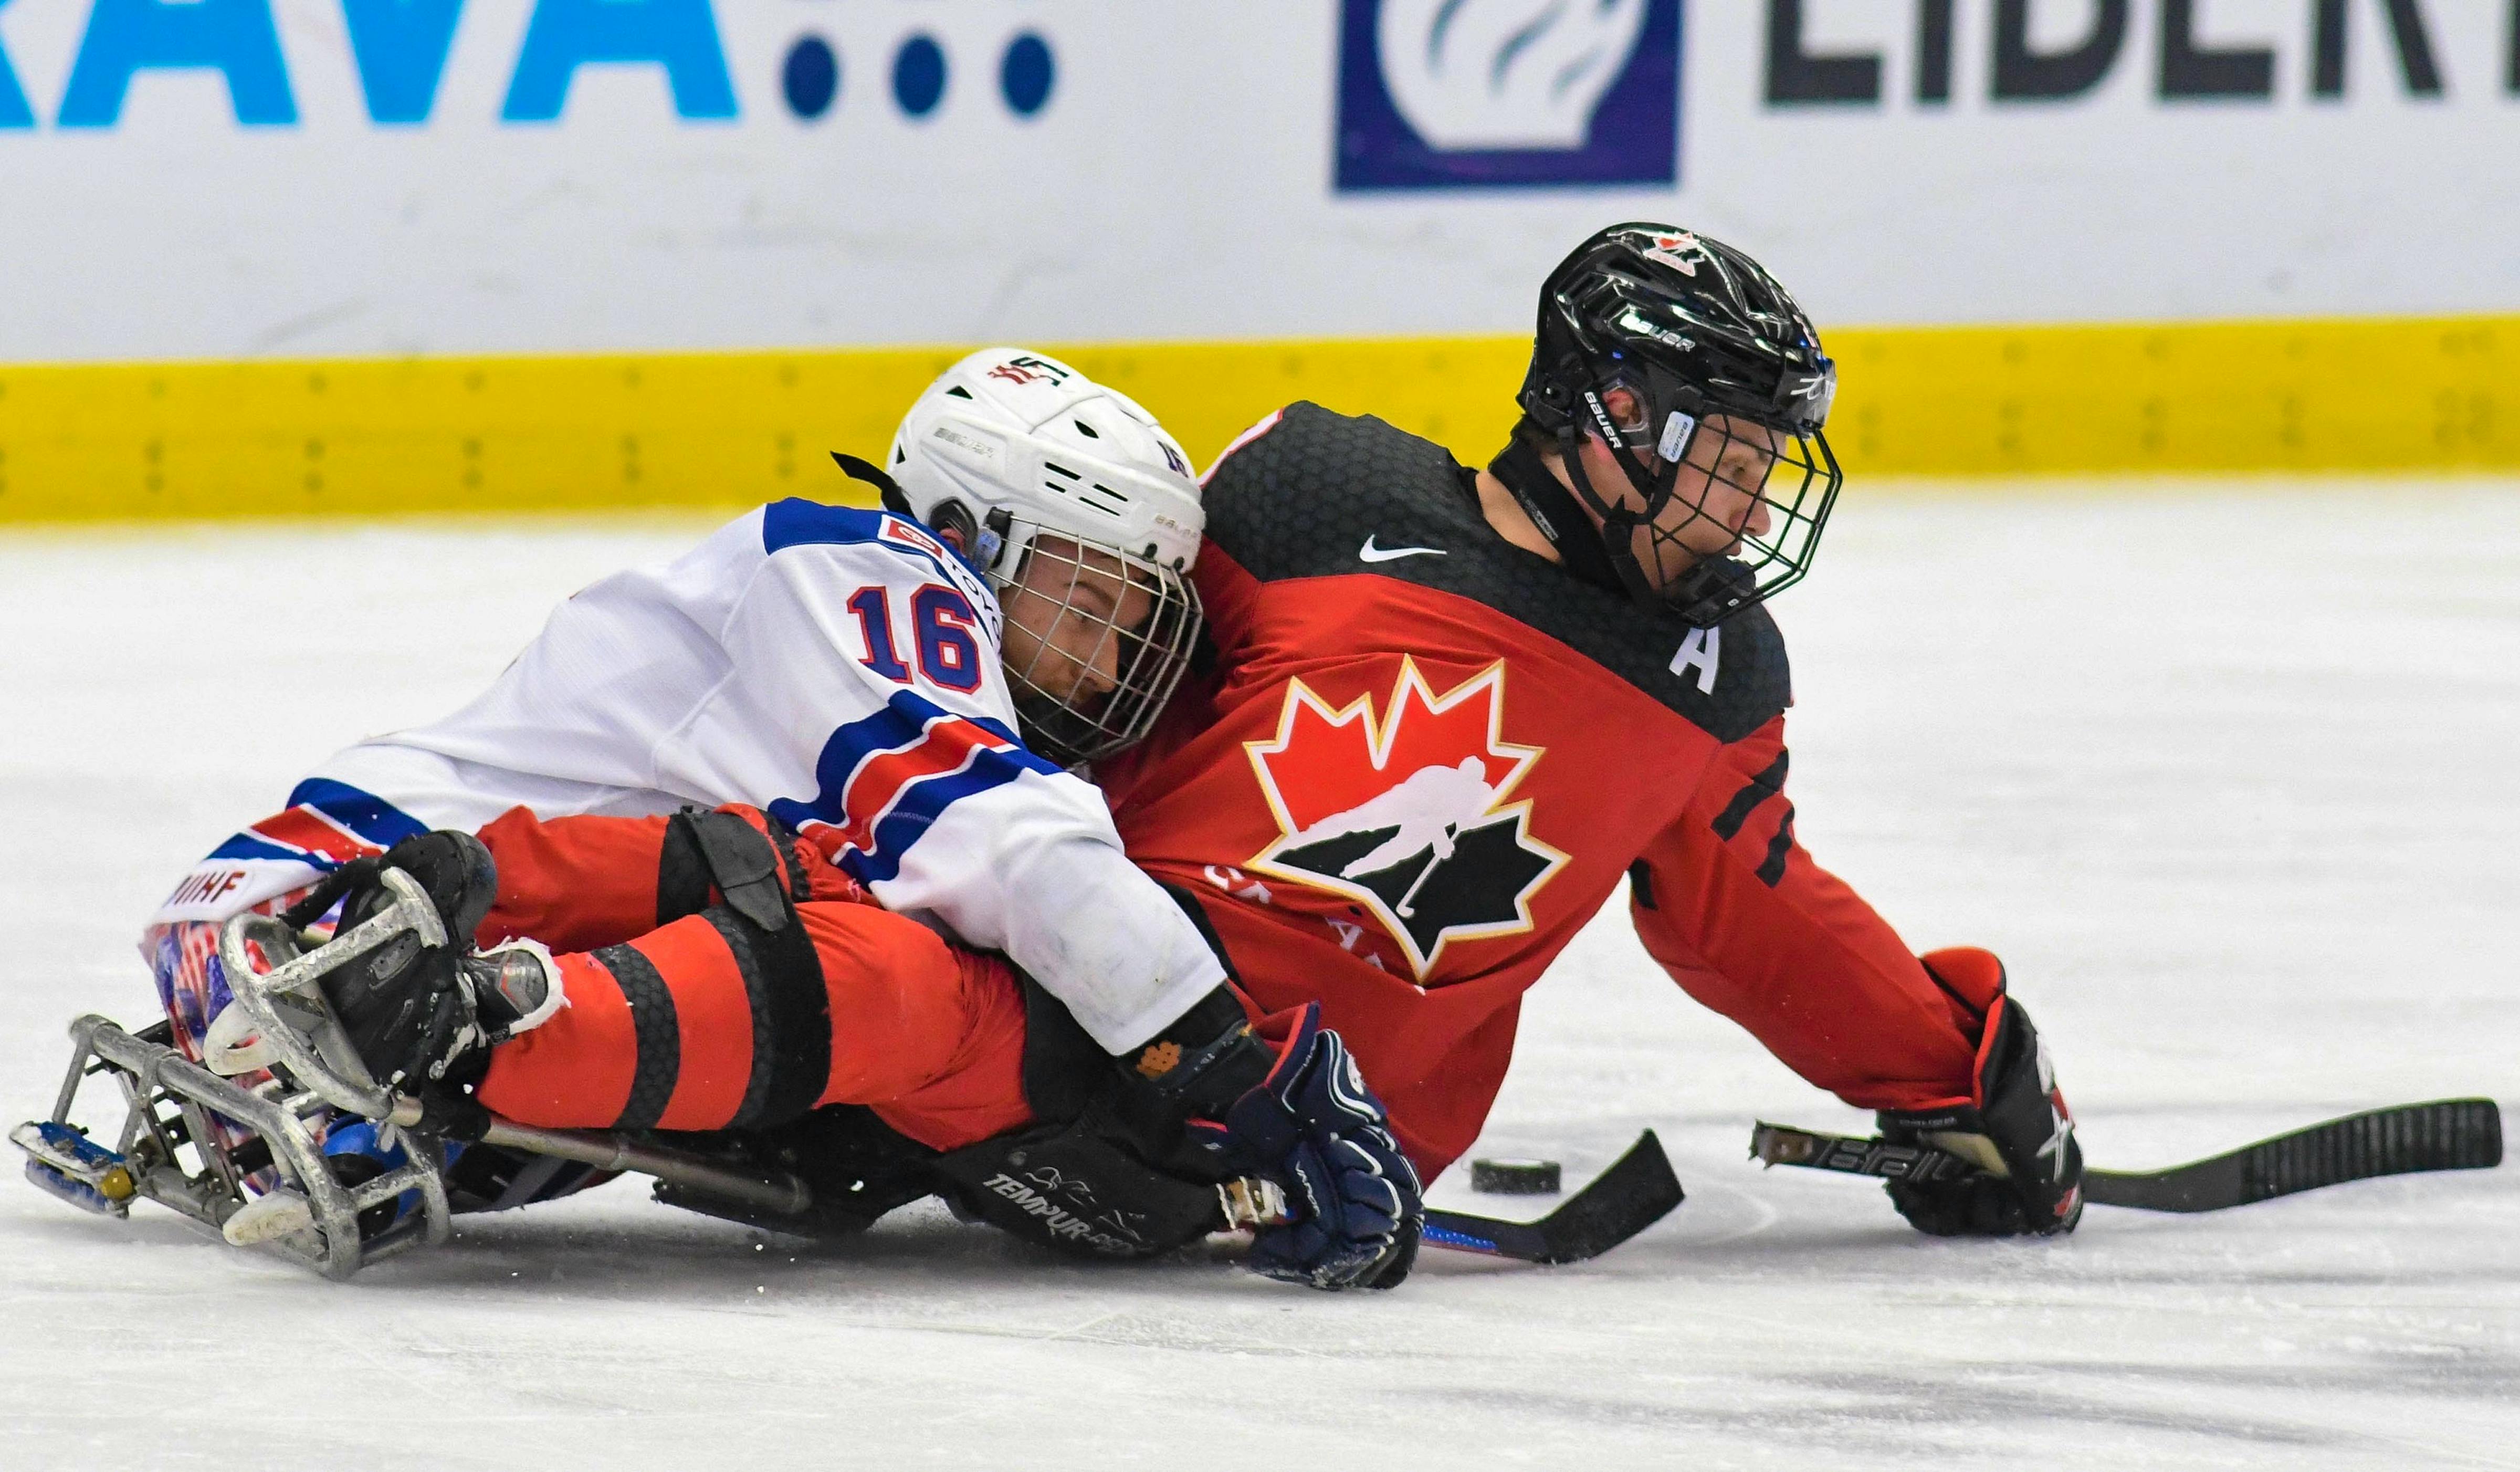 Canada's Para ice hockey team named for Beijing 2022 Paralympic